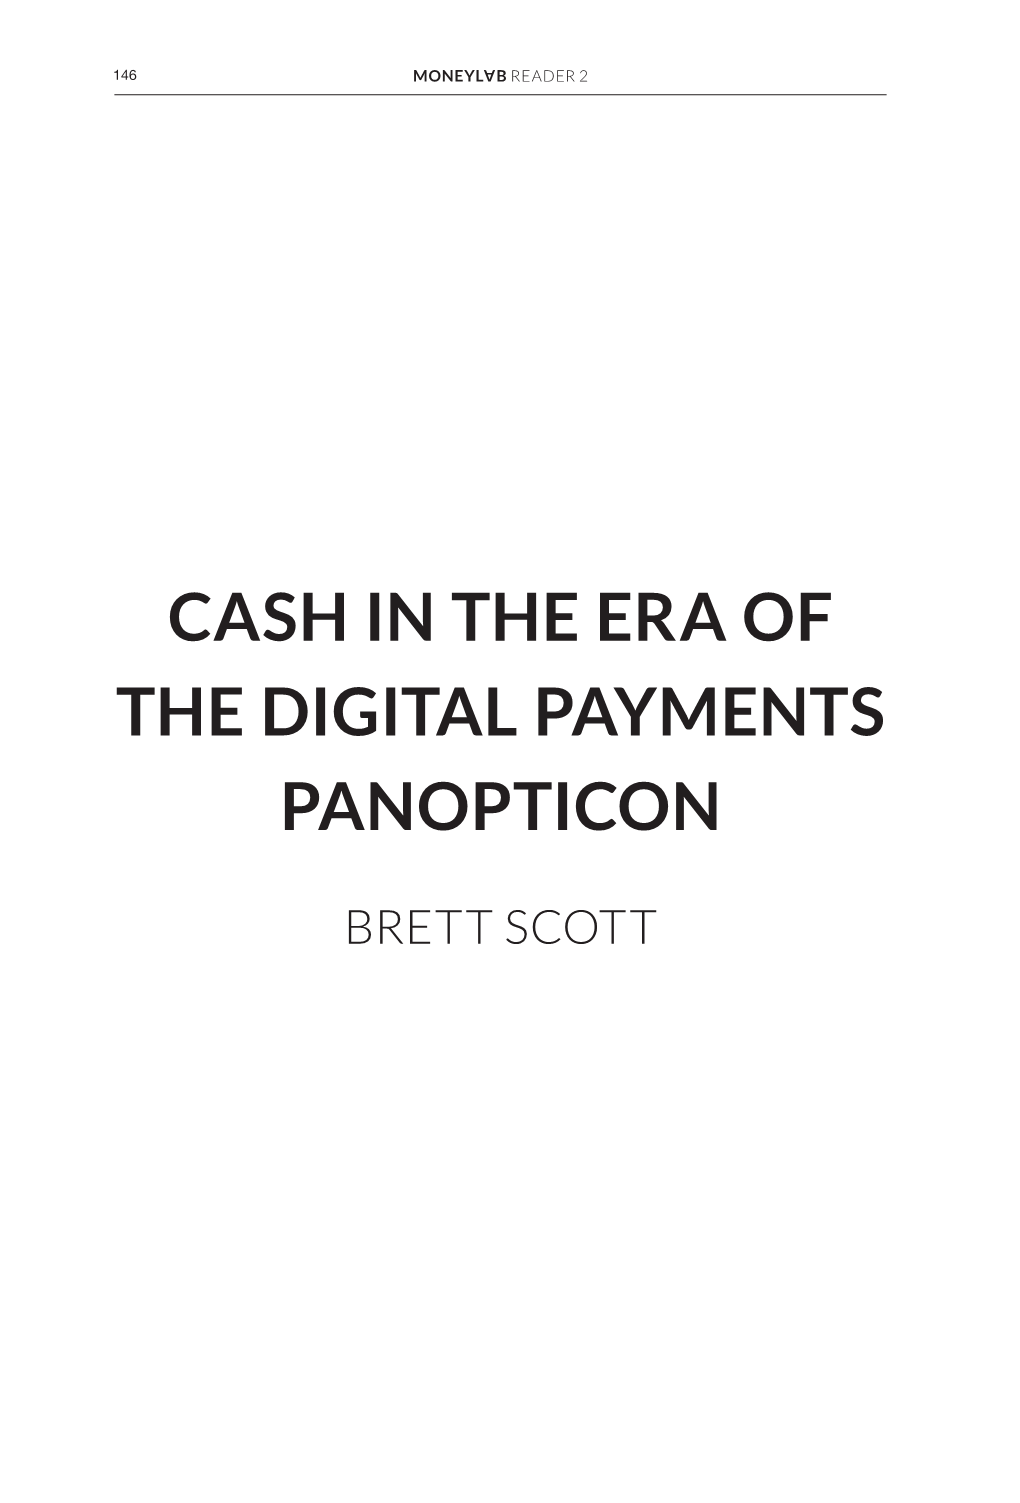 Brett Scott – Cash in the Era of the Digital Payments Panopticon